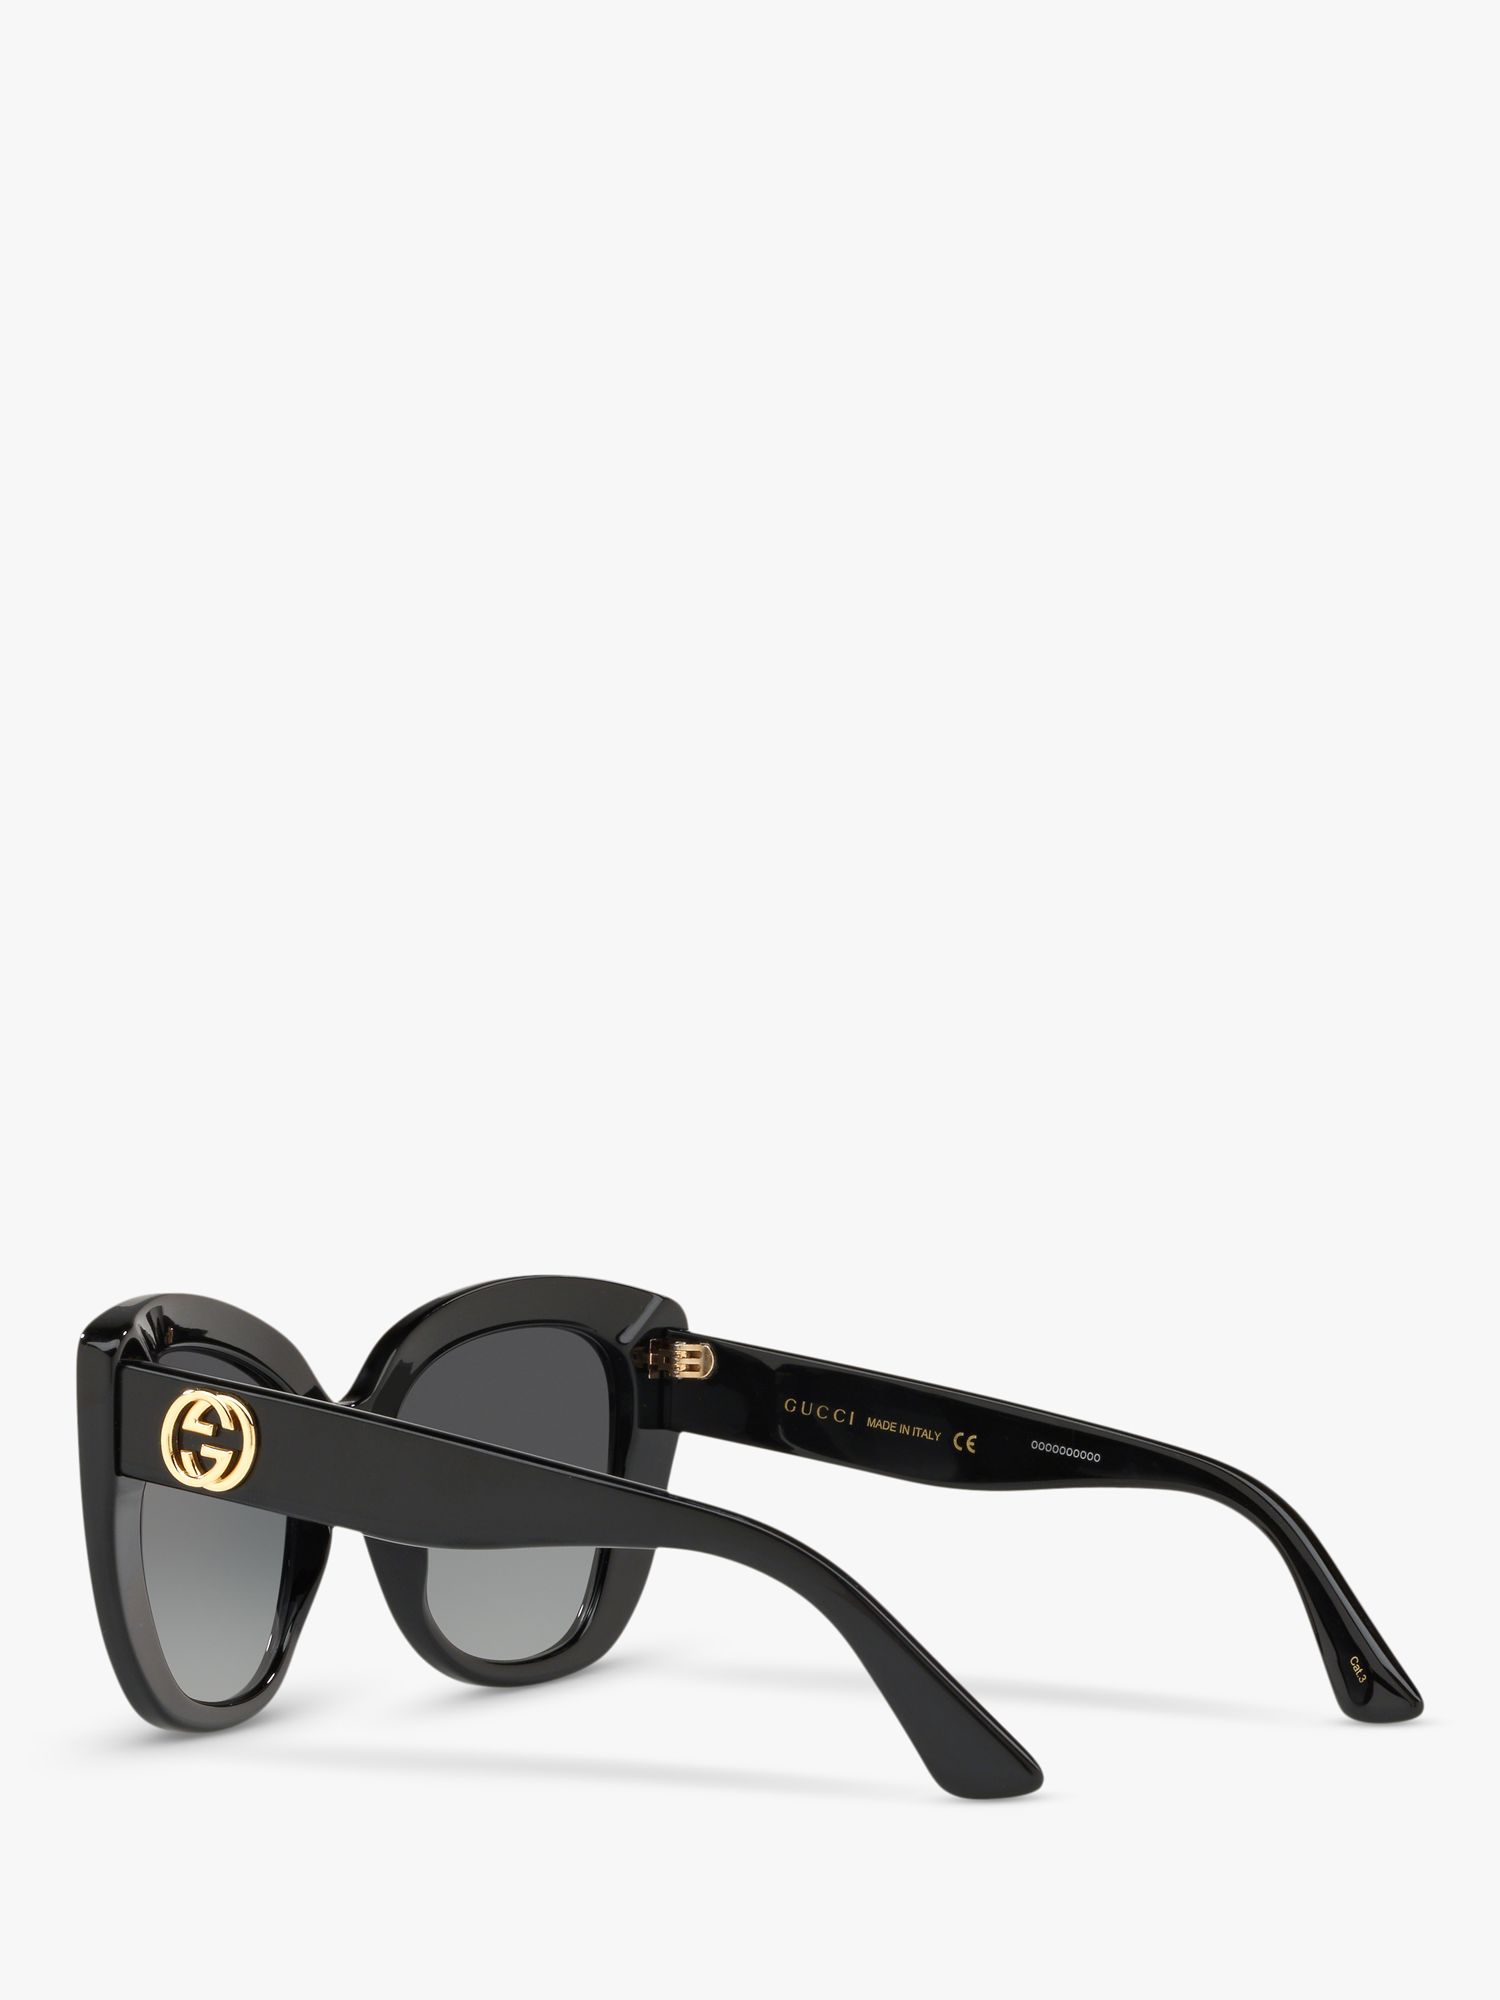 Gucci GC001150 Women's Cat's Eye Sunglasses, Black/Grey Gradient